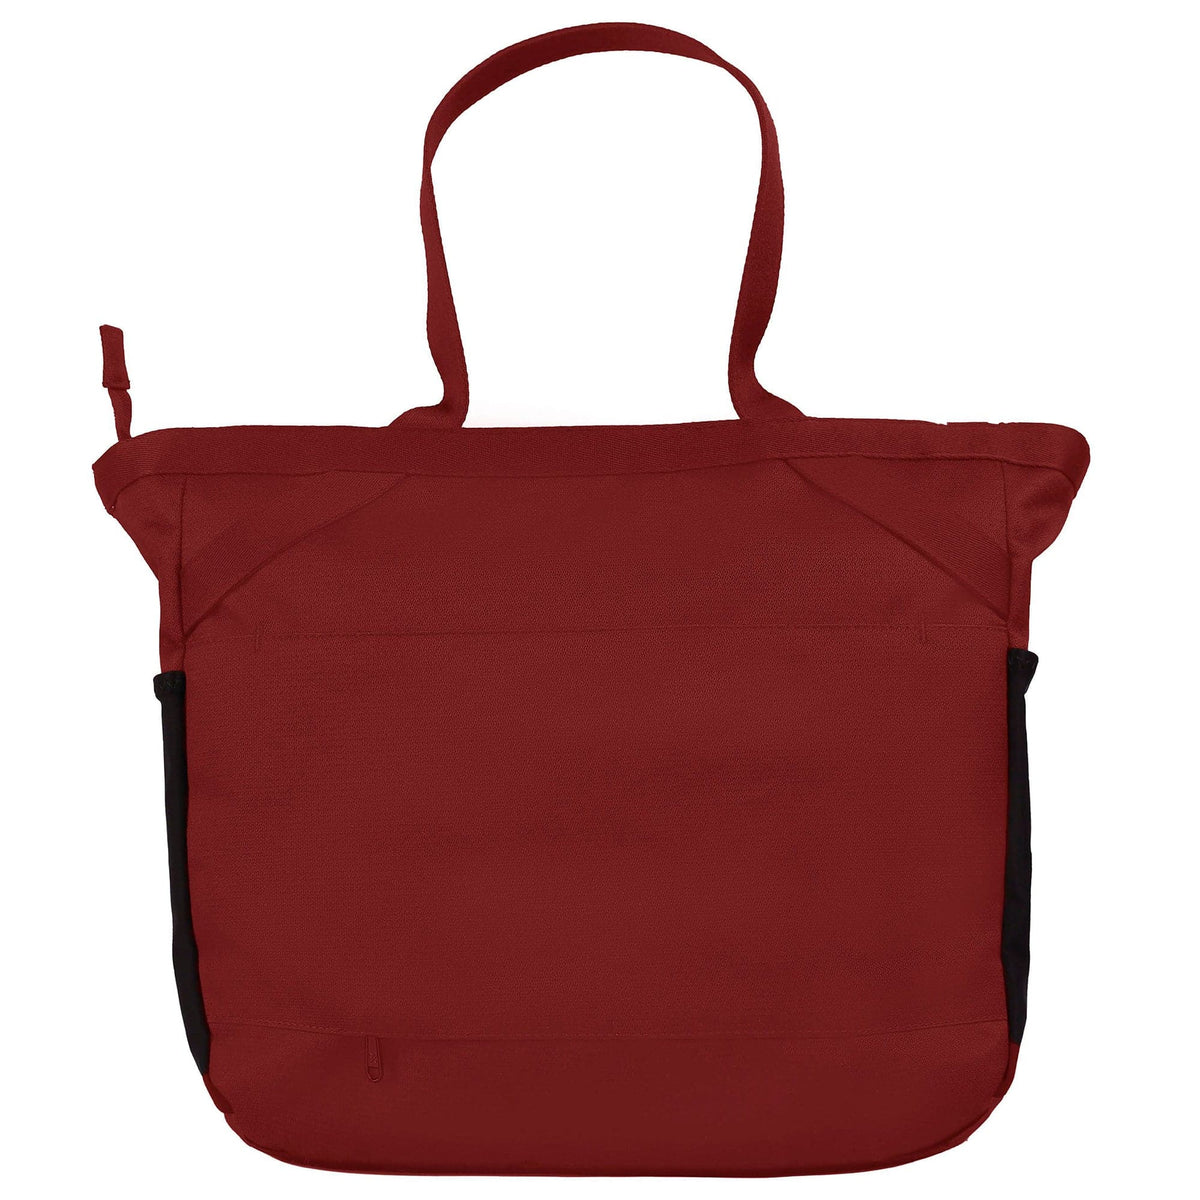 Sherpani Essentials Stride Crossbody Bag